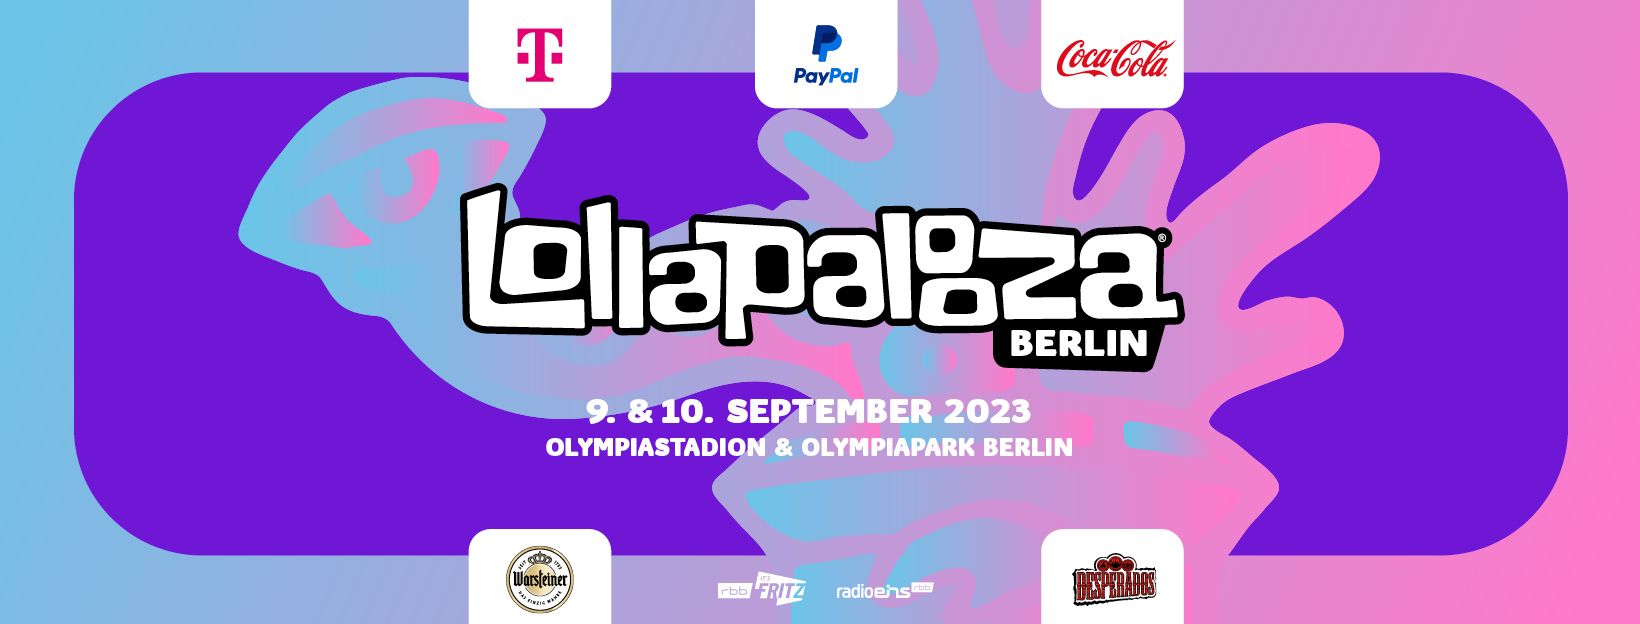 Bild zu Lollapalooza Festival Berlin 2023